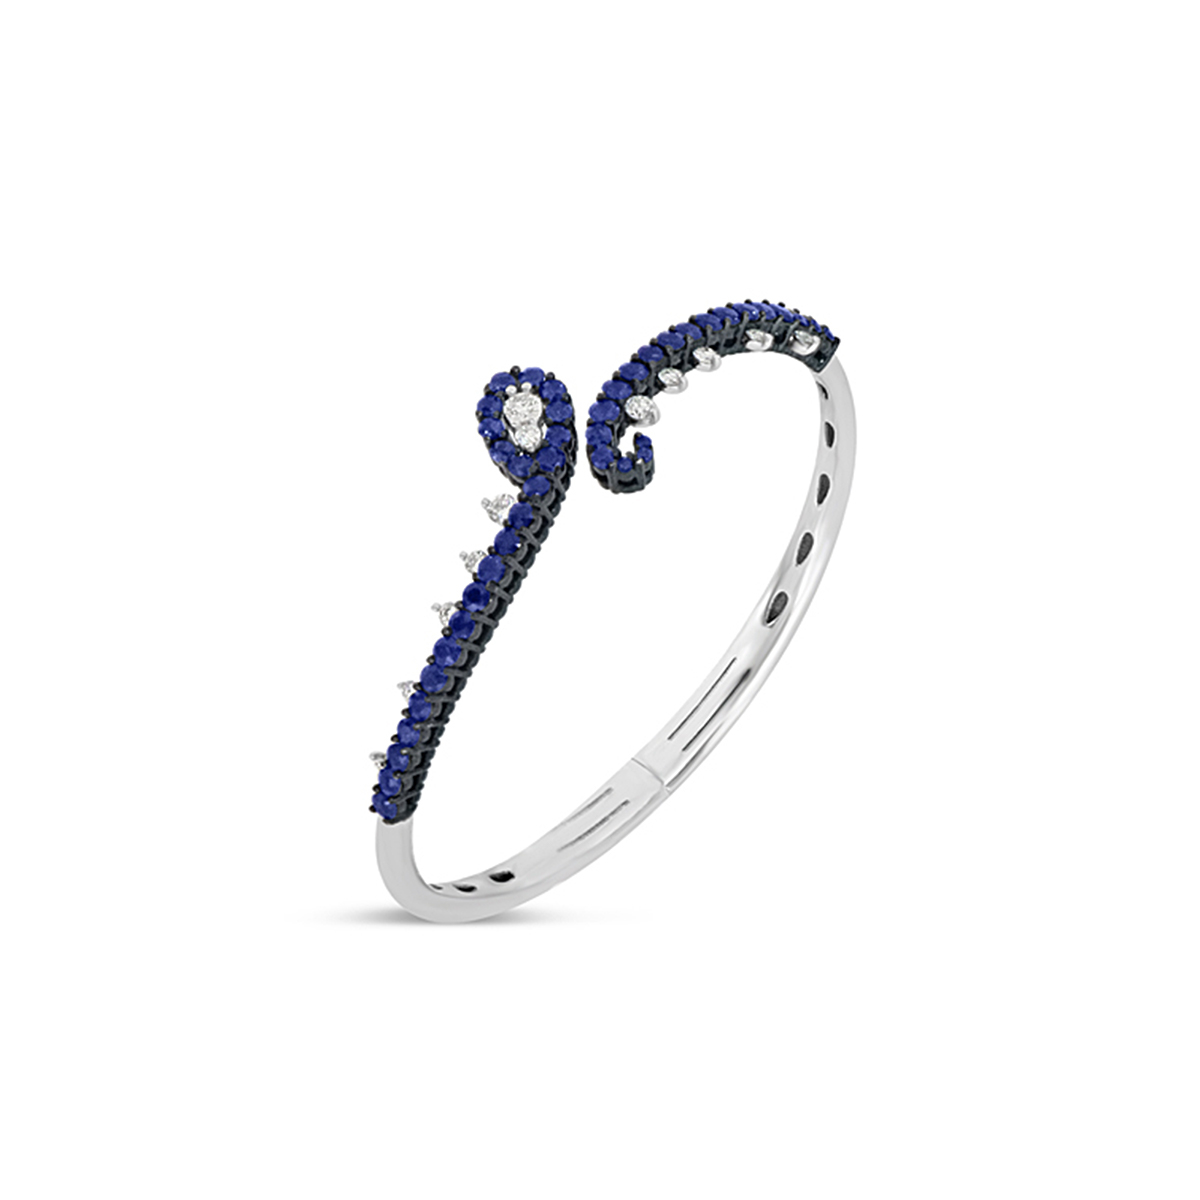 Sapphire and Diamond Cuff Bracelet in 18K White Gold - 